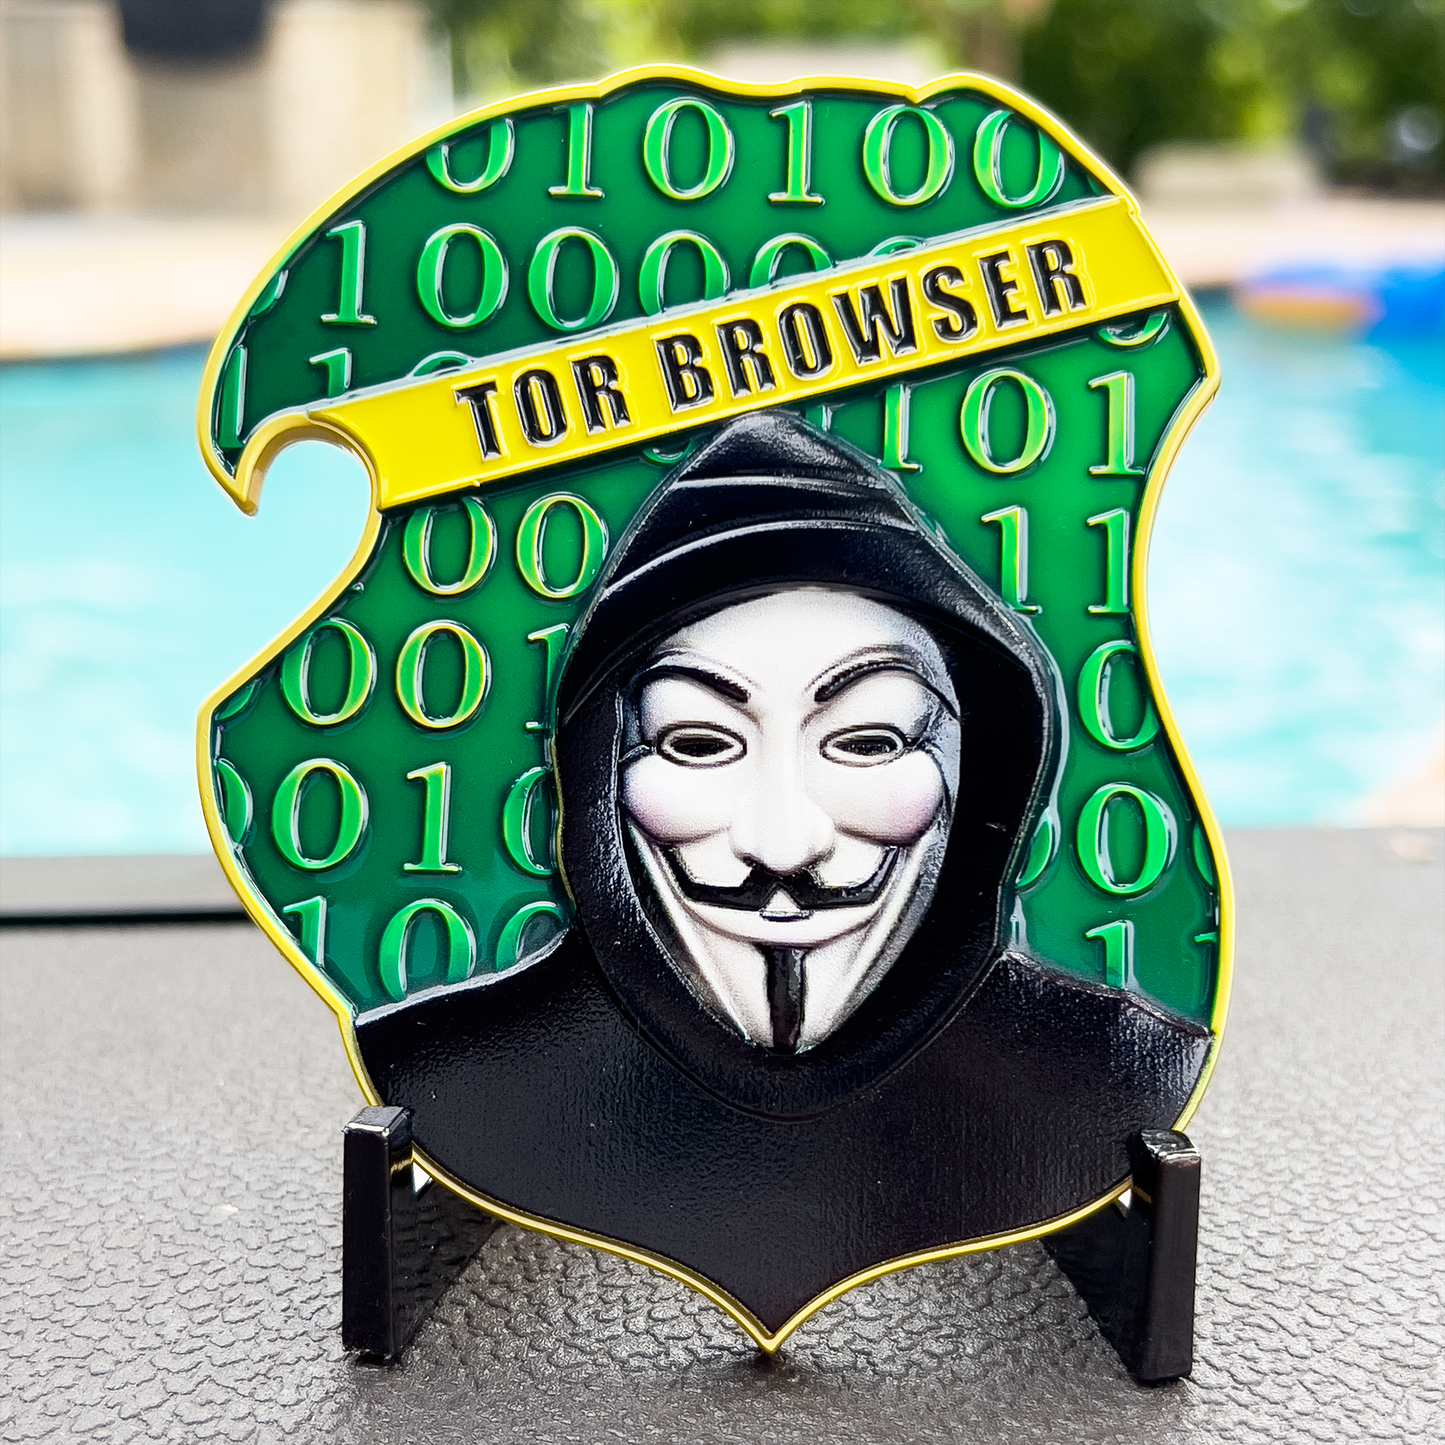 BL1-02 HSI FBI CIA DEA Financial Crimes Investigations Dark Web Challenge Coin Bottle Opener Tor Browser Crypto